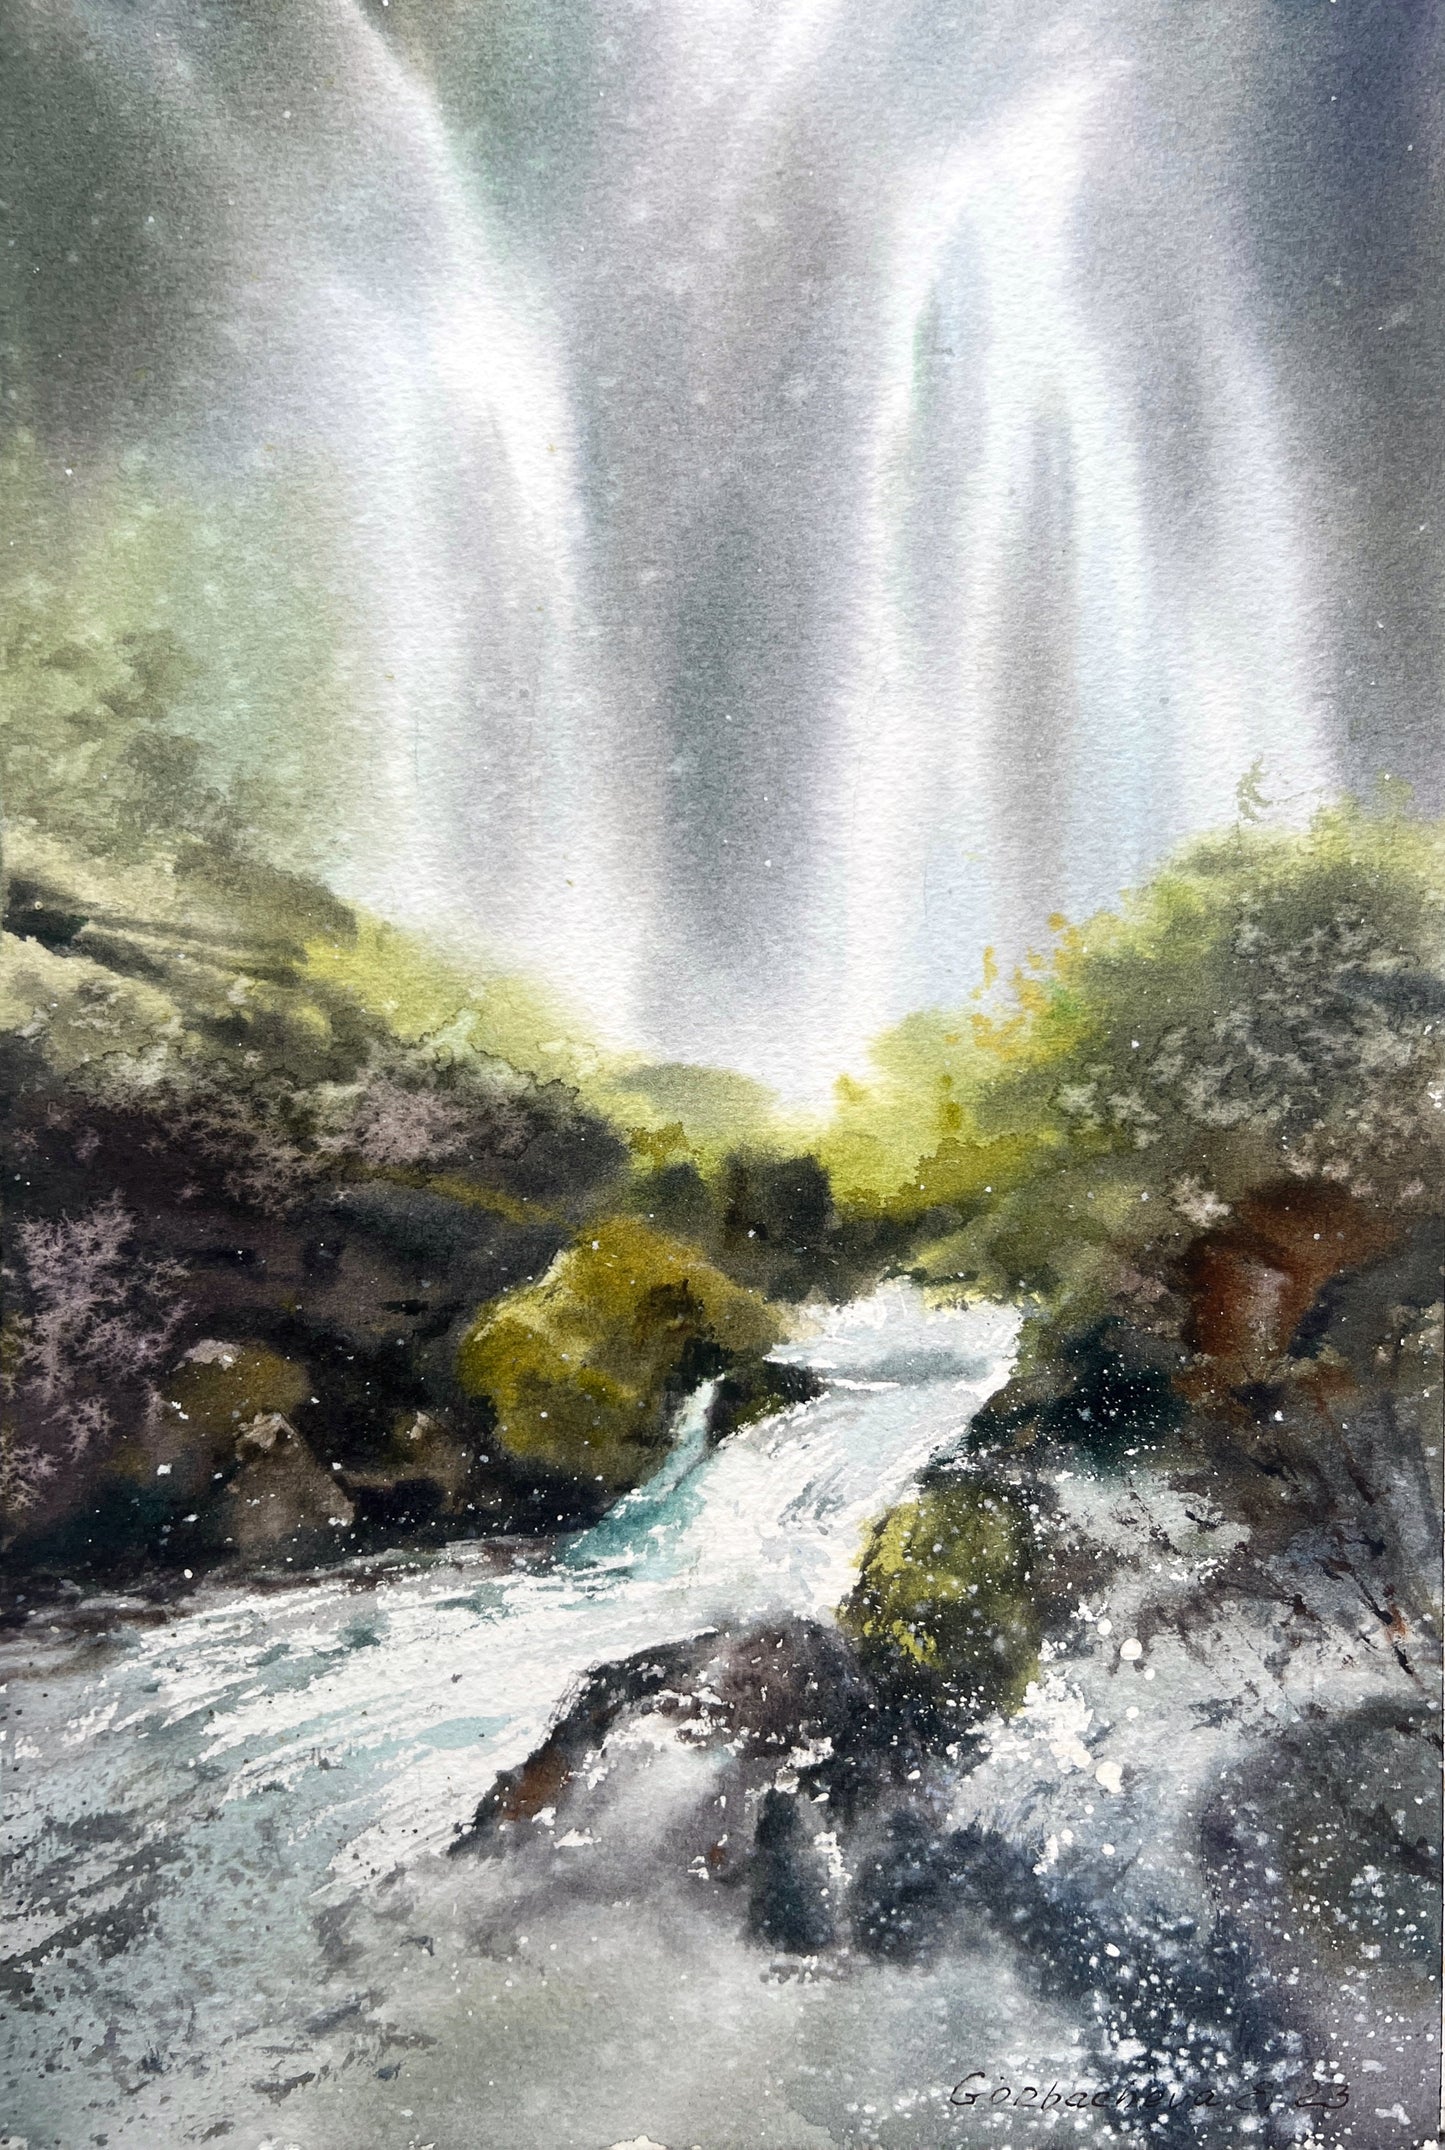 Waterfall Watercolor Original Painting, Nature Art Decor, Icelandic Nordic Landscape Artwork, Gift For Traveler